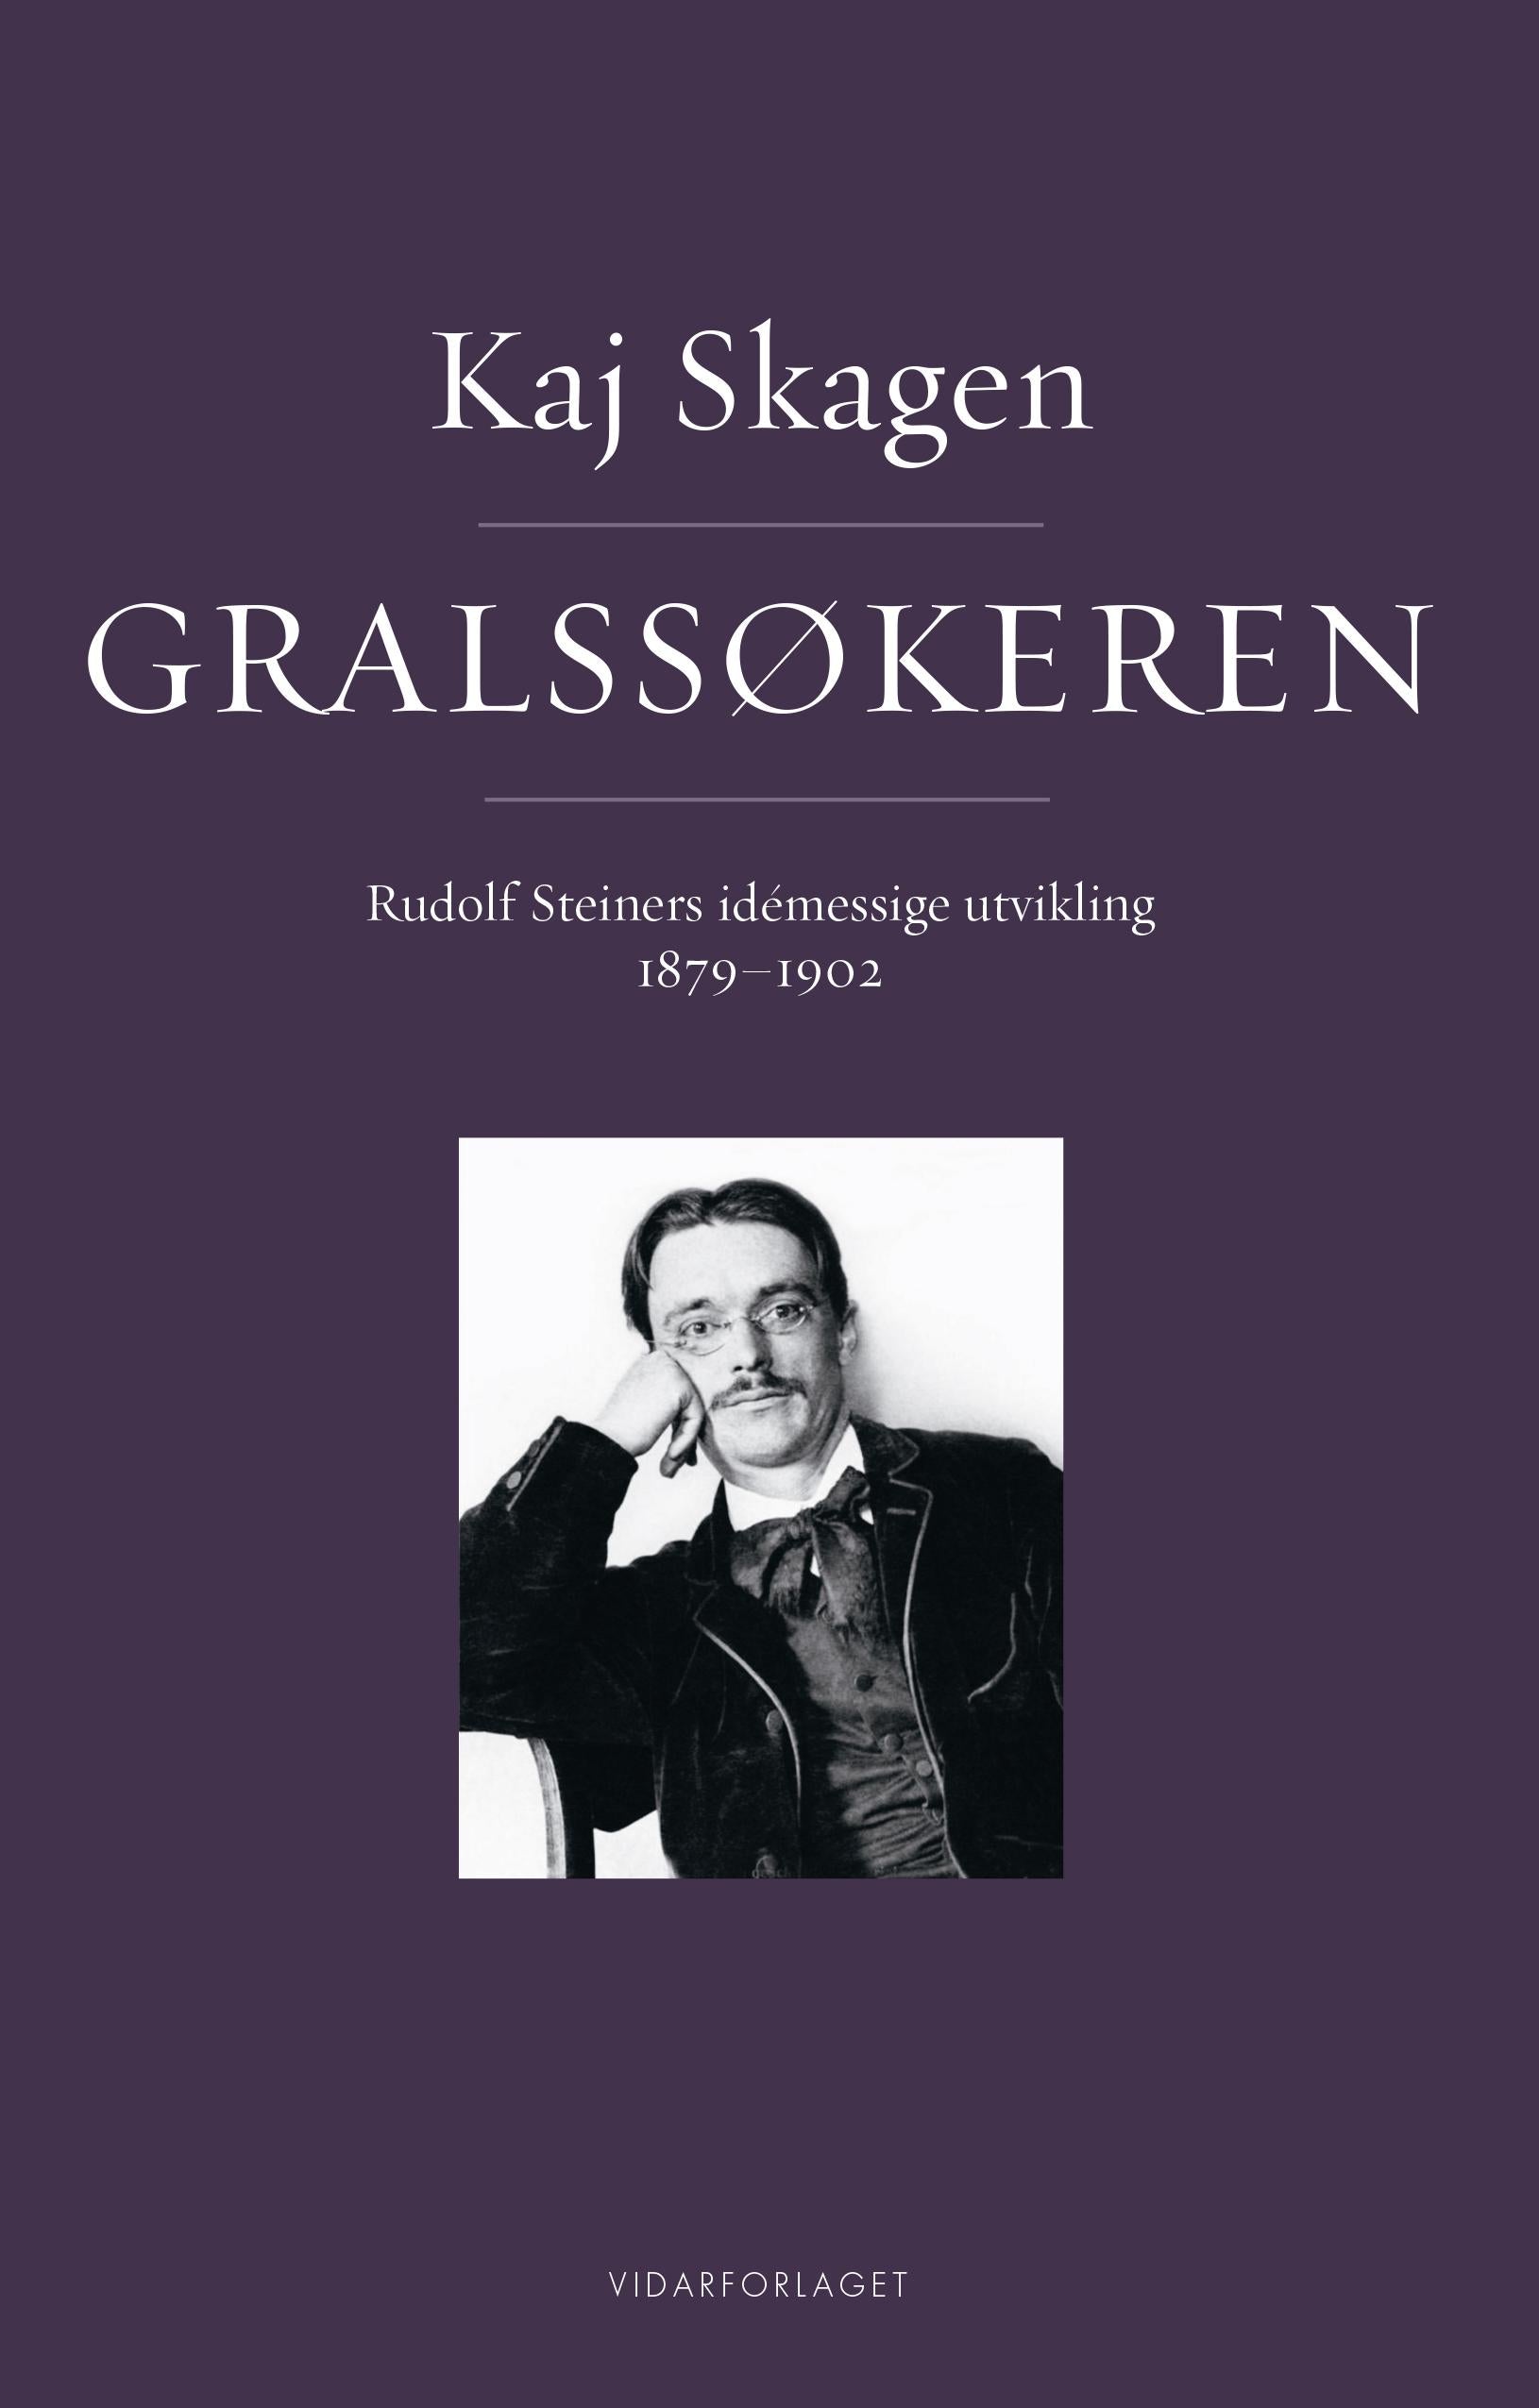 Gralssøkeren: Rudolf Steiners idémessige utvikling 1895-1902